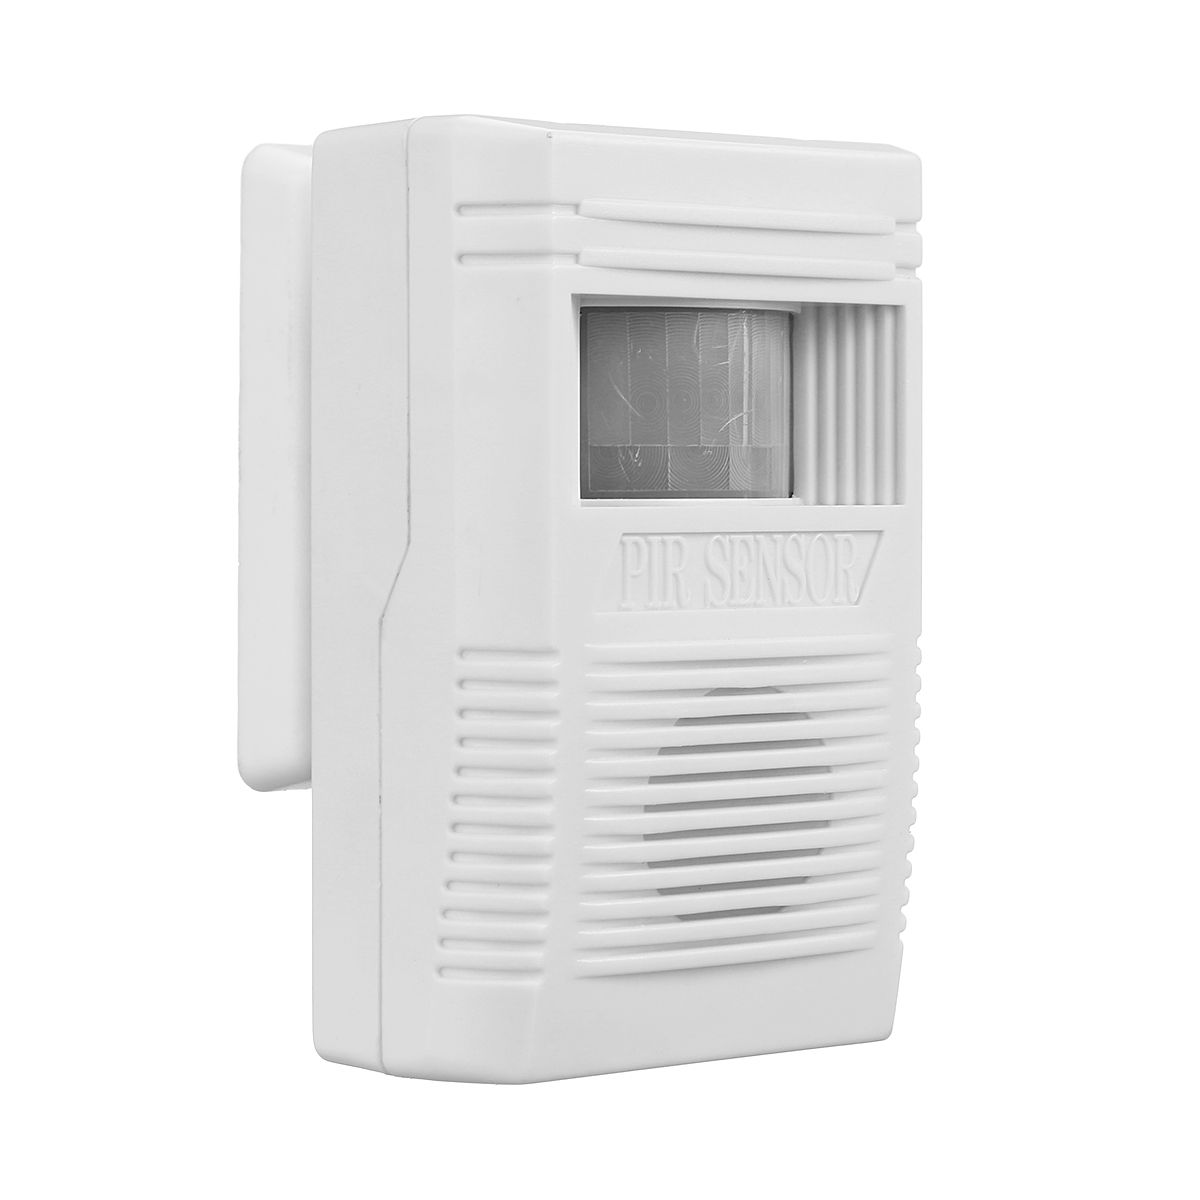 Wireless-PIR-Motion-Sensor-Burglar-Alarm-IR-Detector-Security-System-1719885